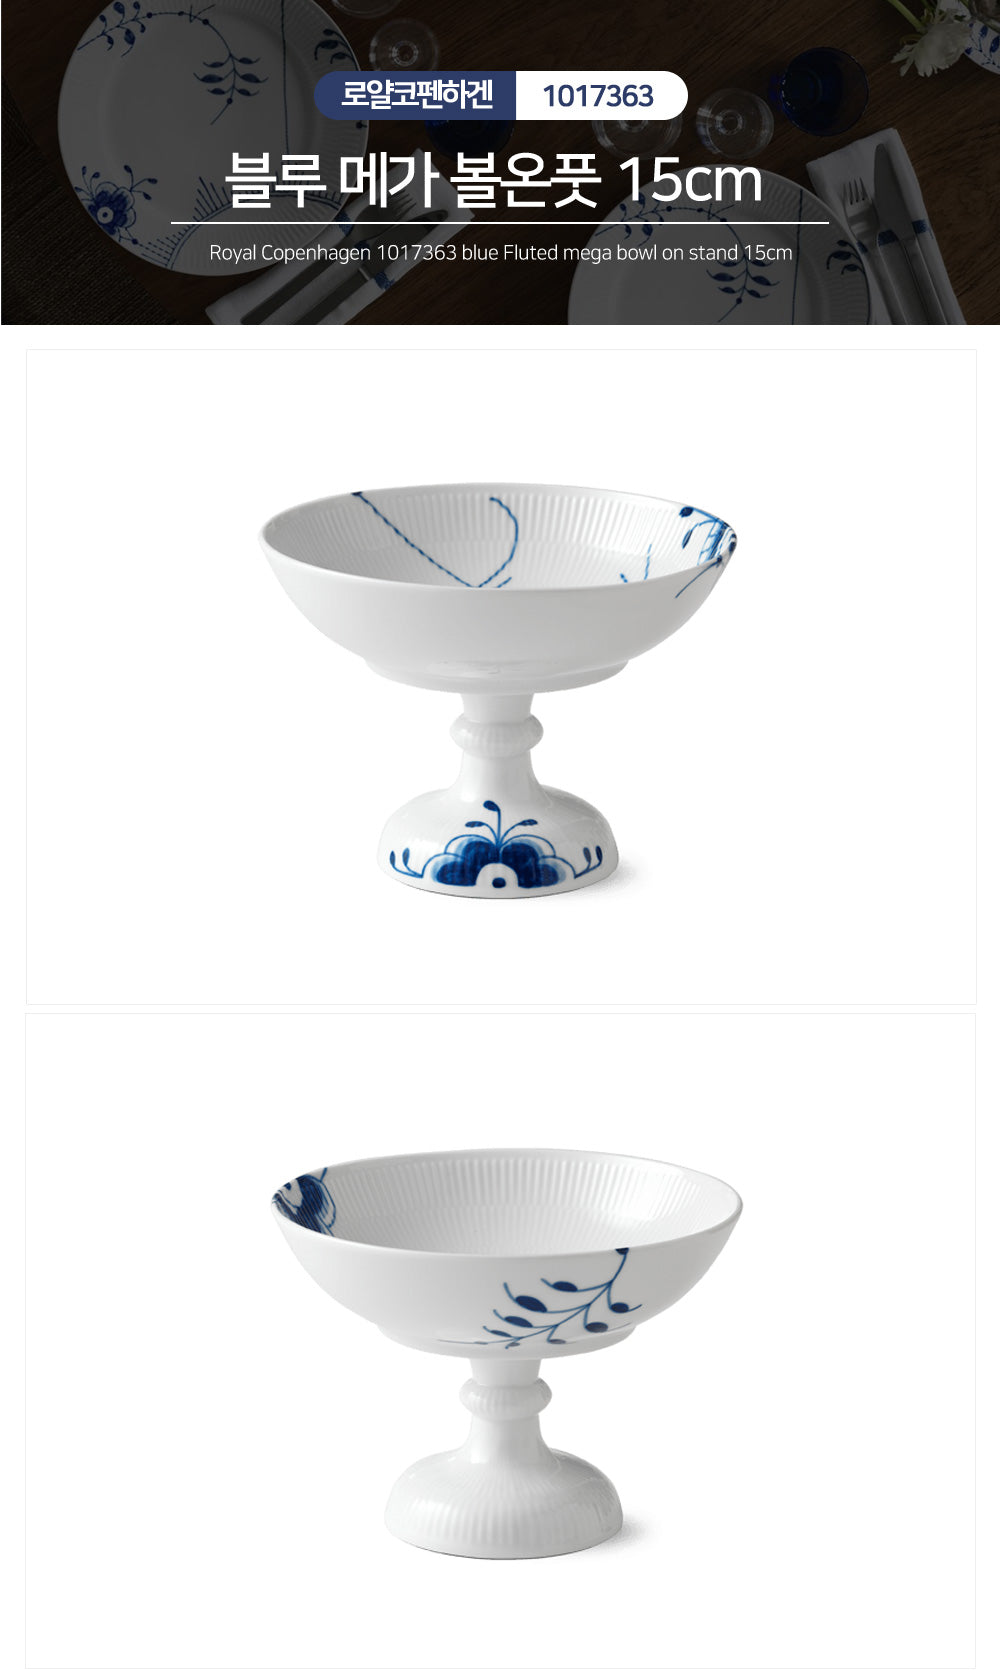 Royal Copenhagen 1017363 blue Fluted mega bowl on stand 15cm